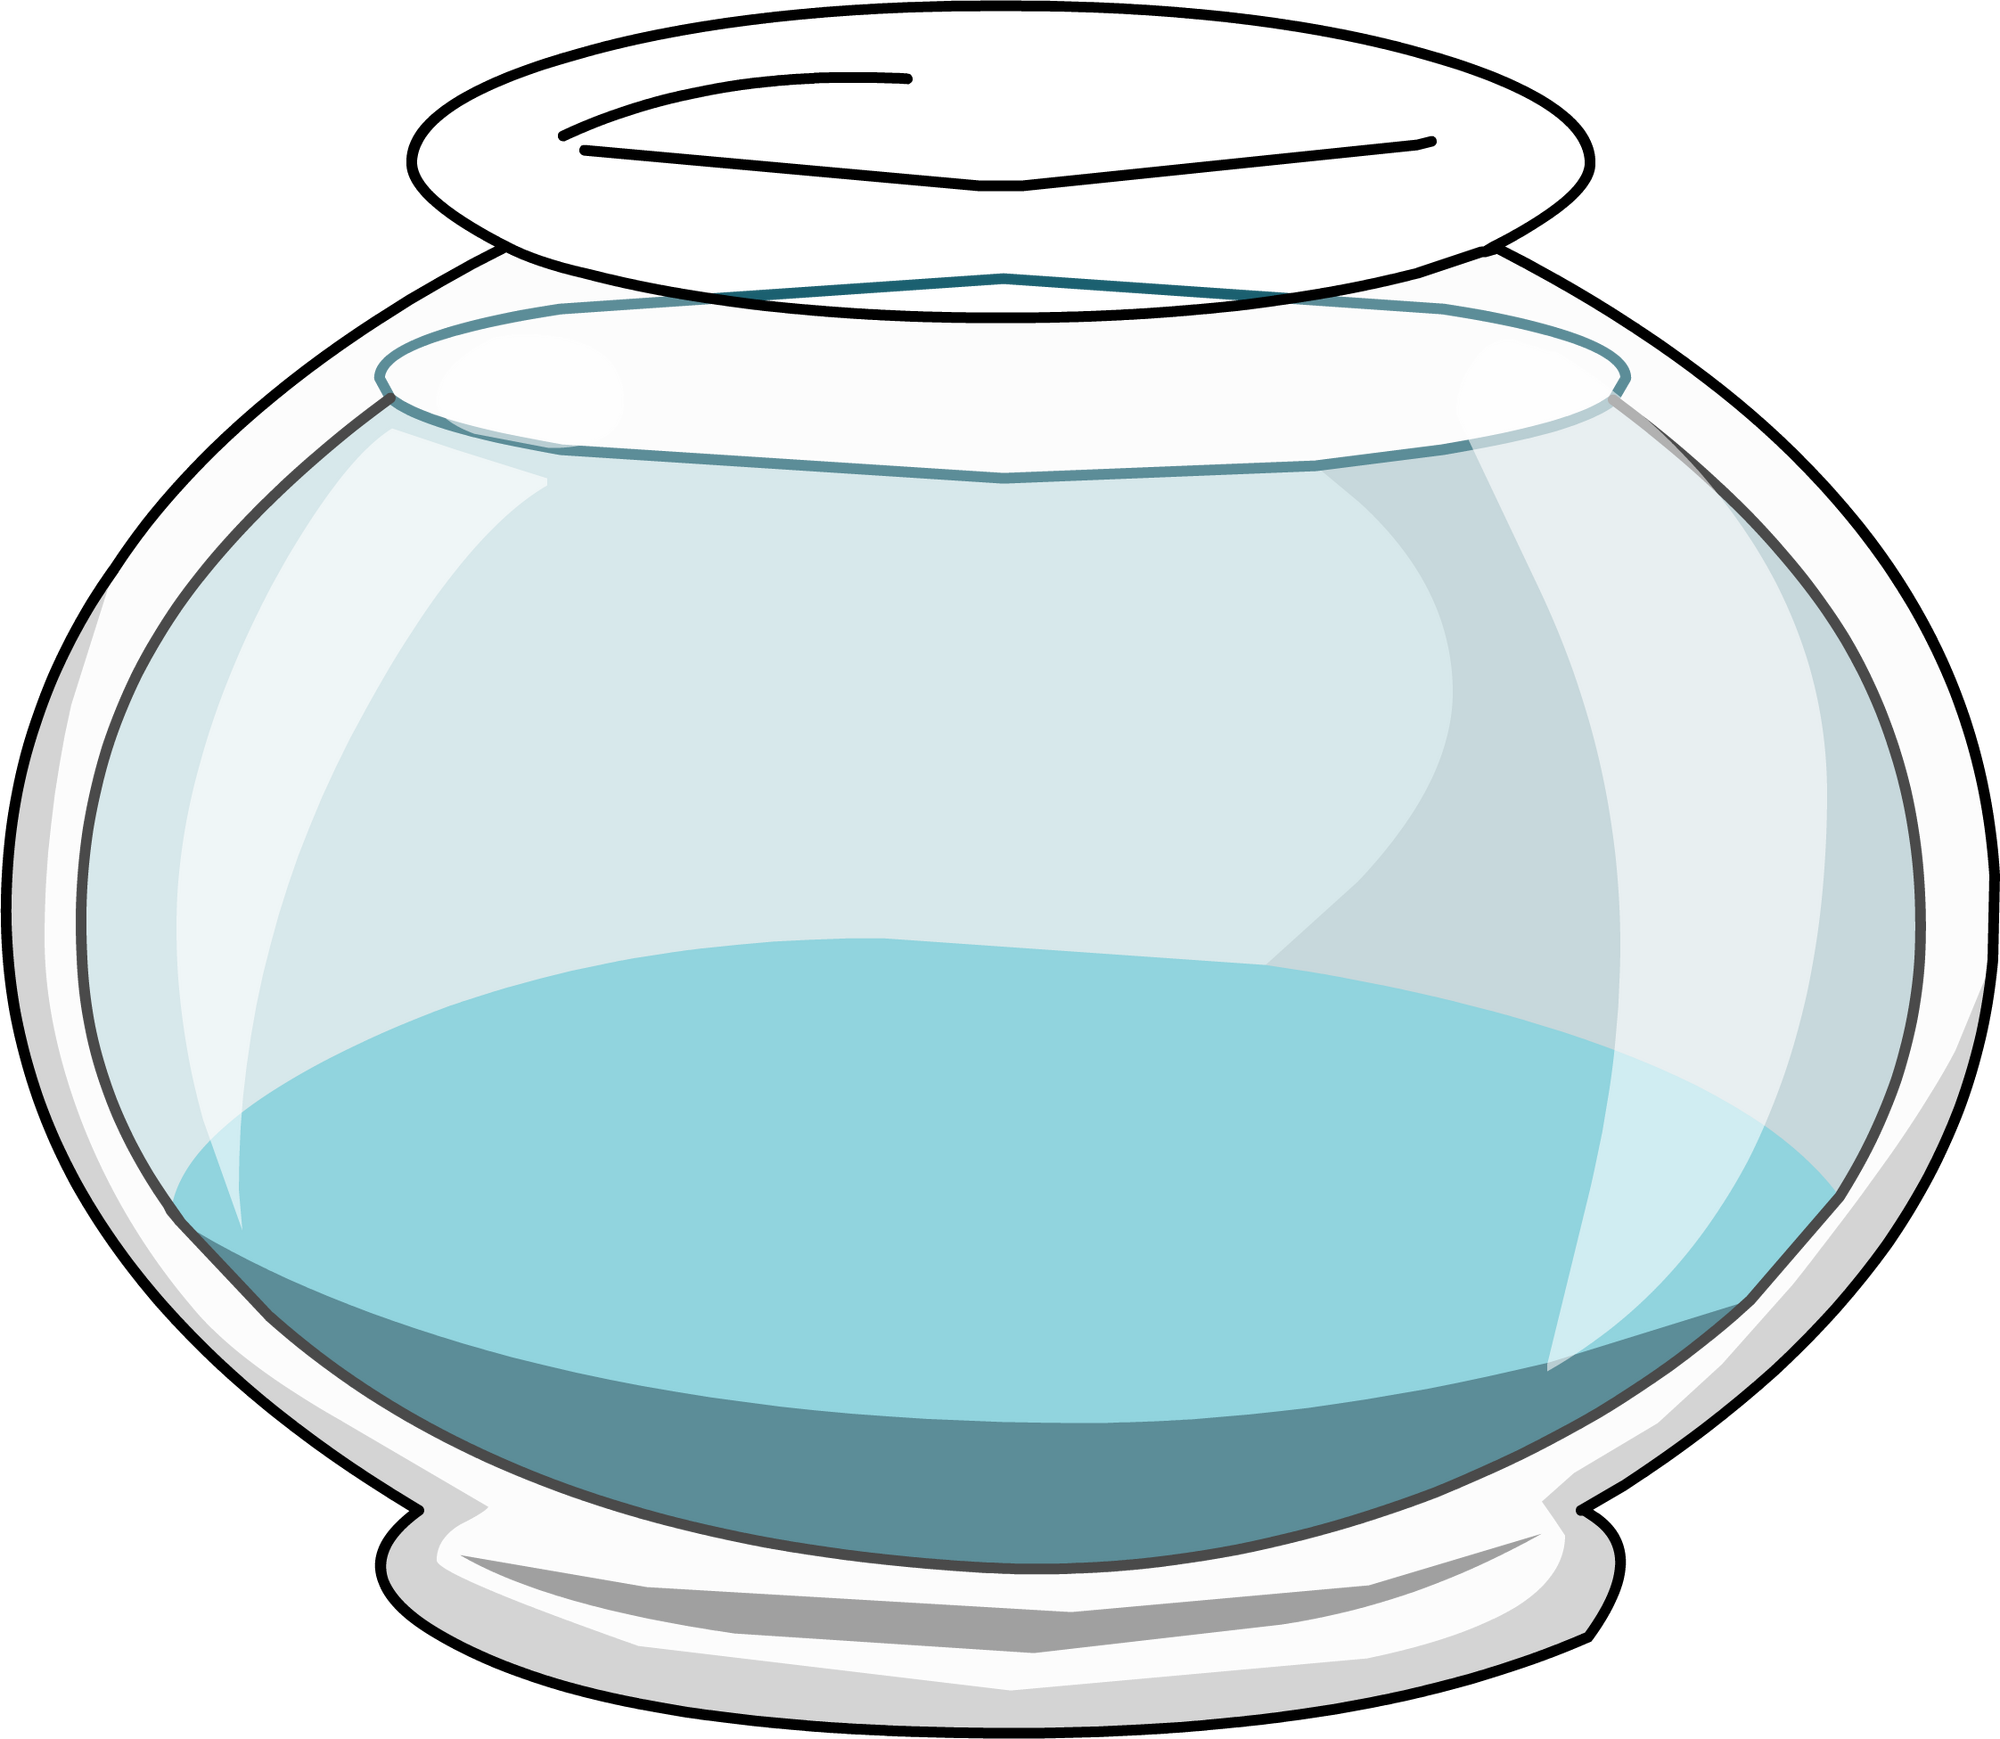 Fish Bowl (igloo) | Club Penguin Wiki | Fandom powered by Wikia